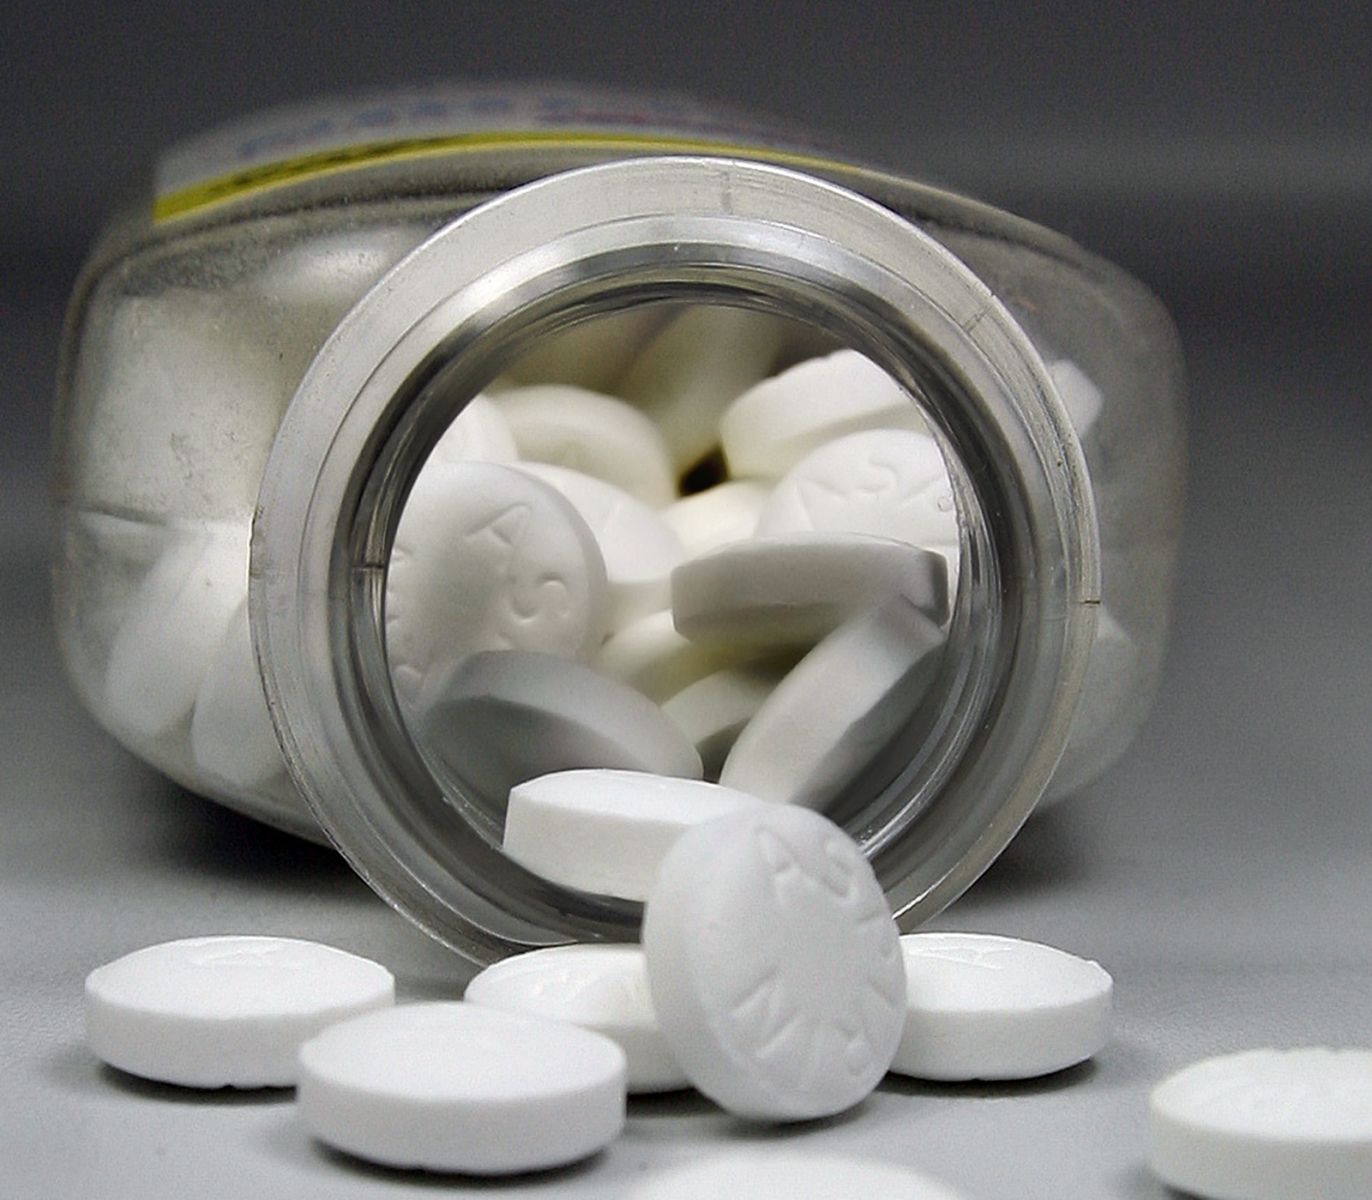 Daily use of aspirin may be dangerous